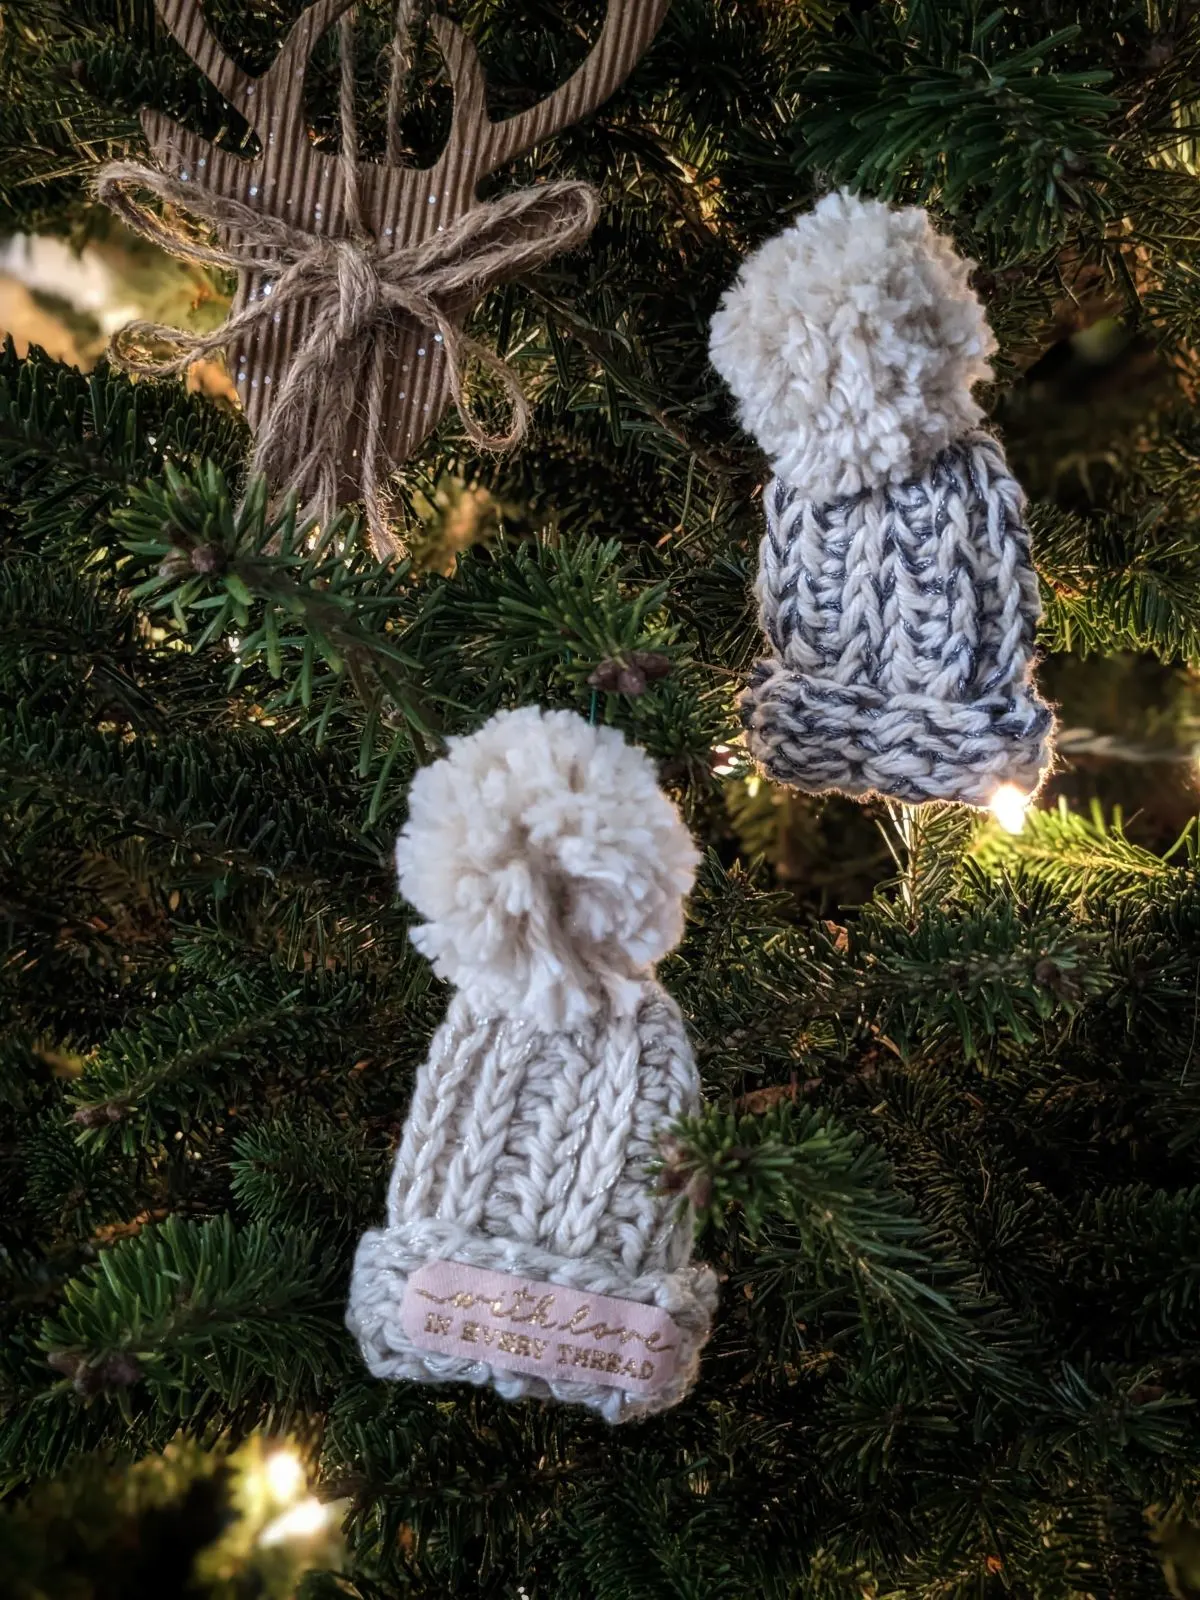 A mini crochet beanie ornament in a Christmas tree.